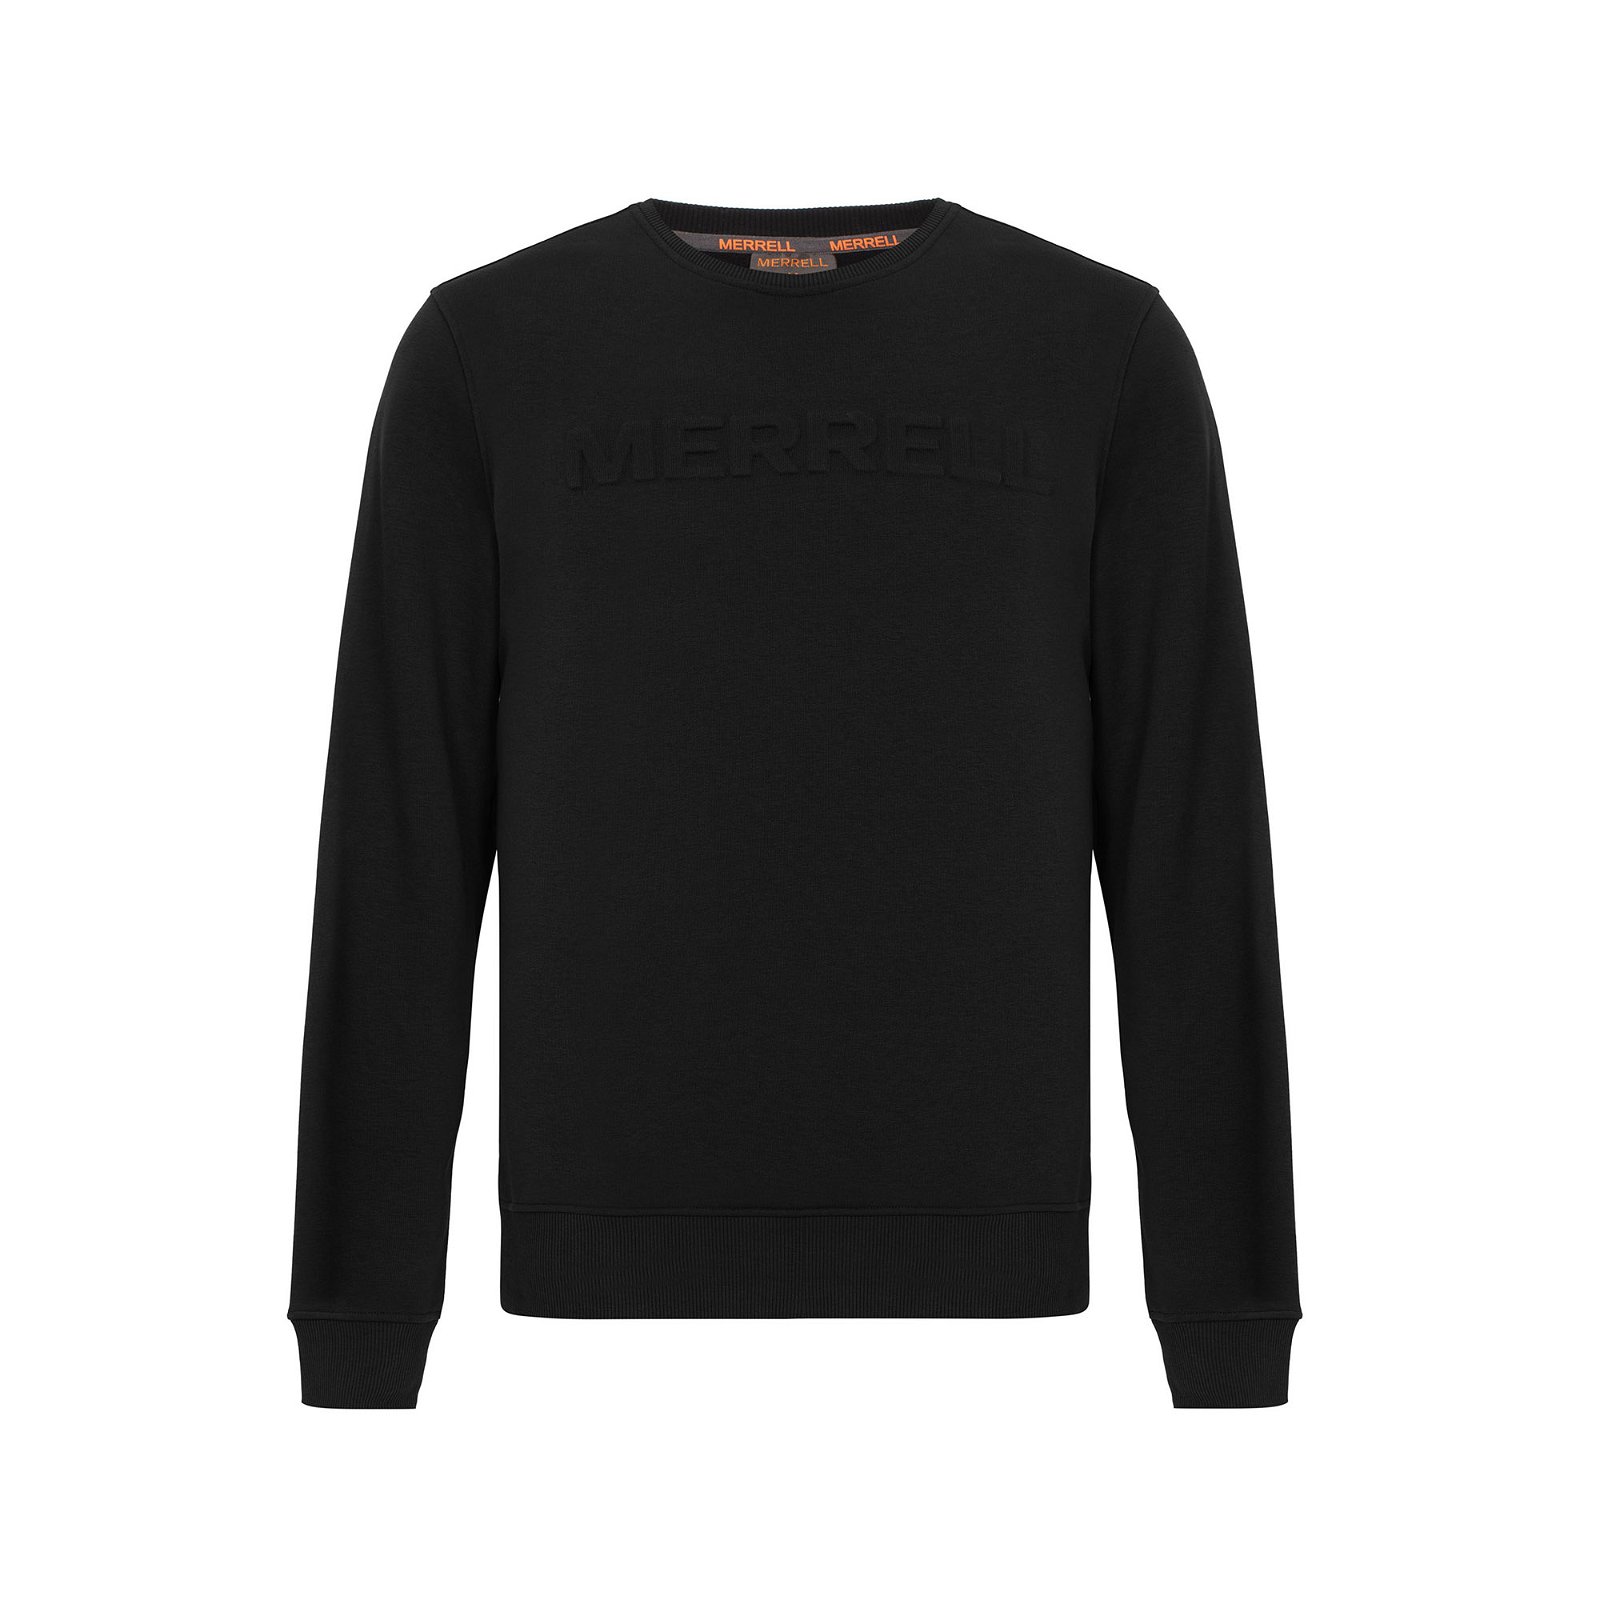 Merrell Simple Erkek Sweatshirt - Siyah - 1